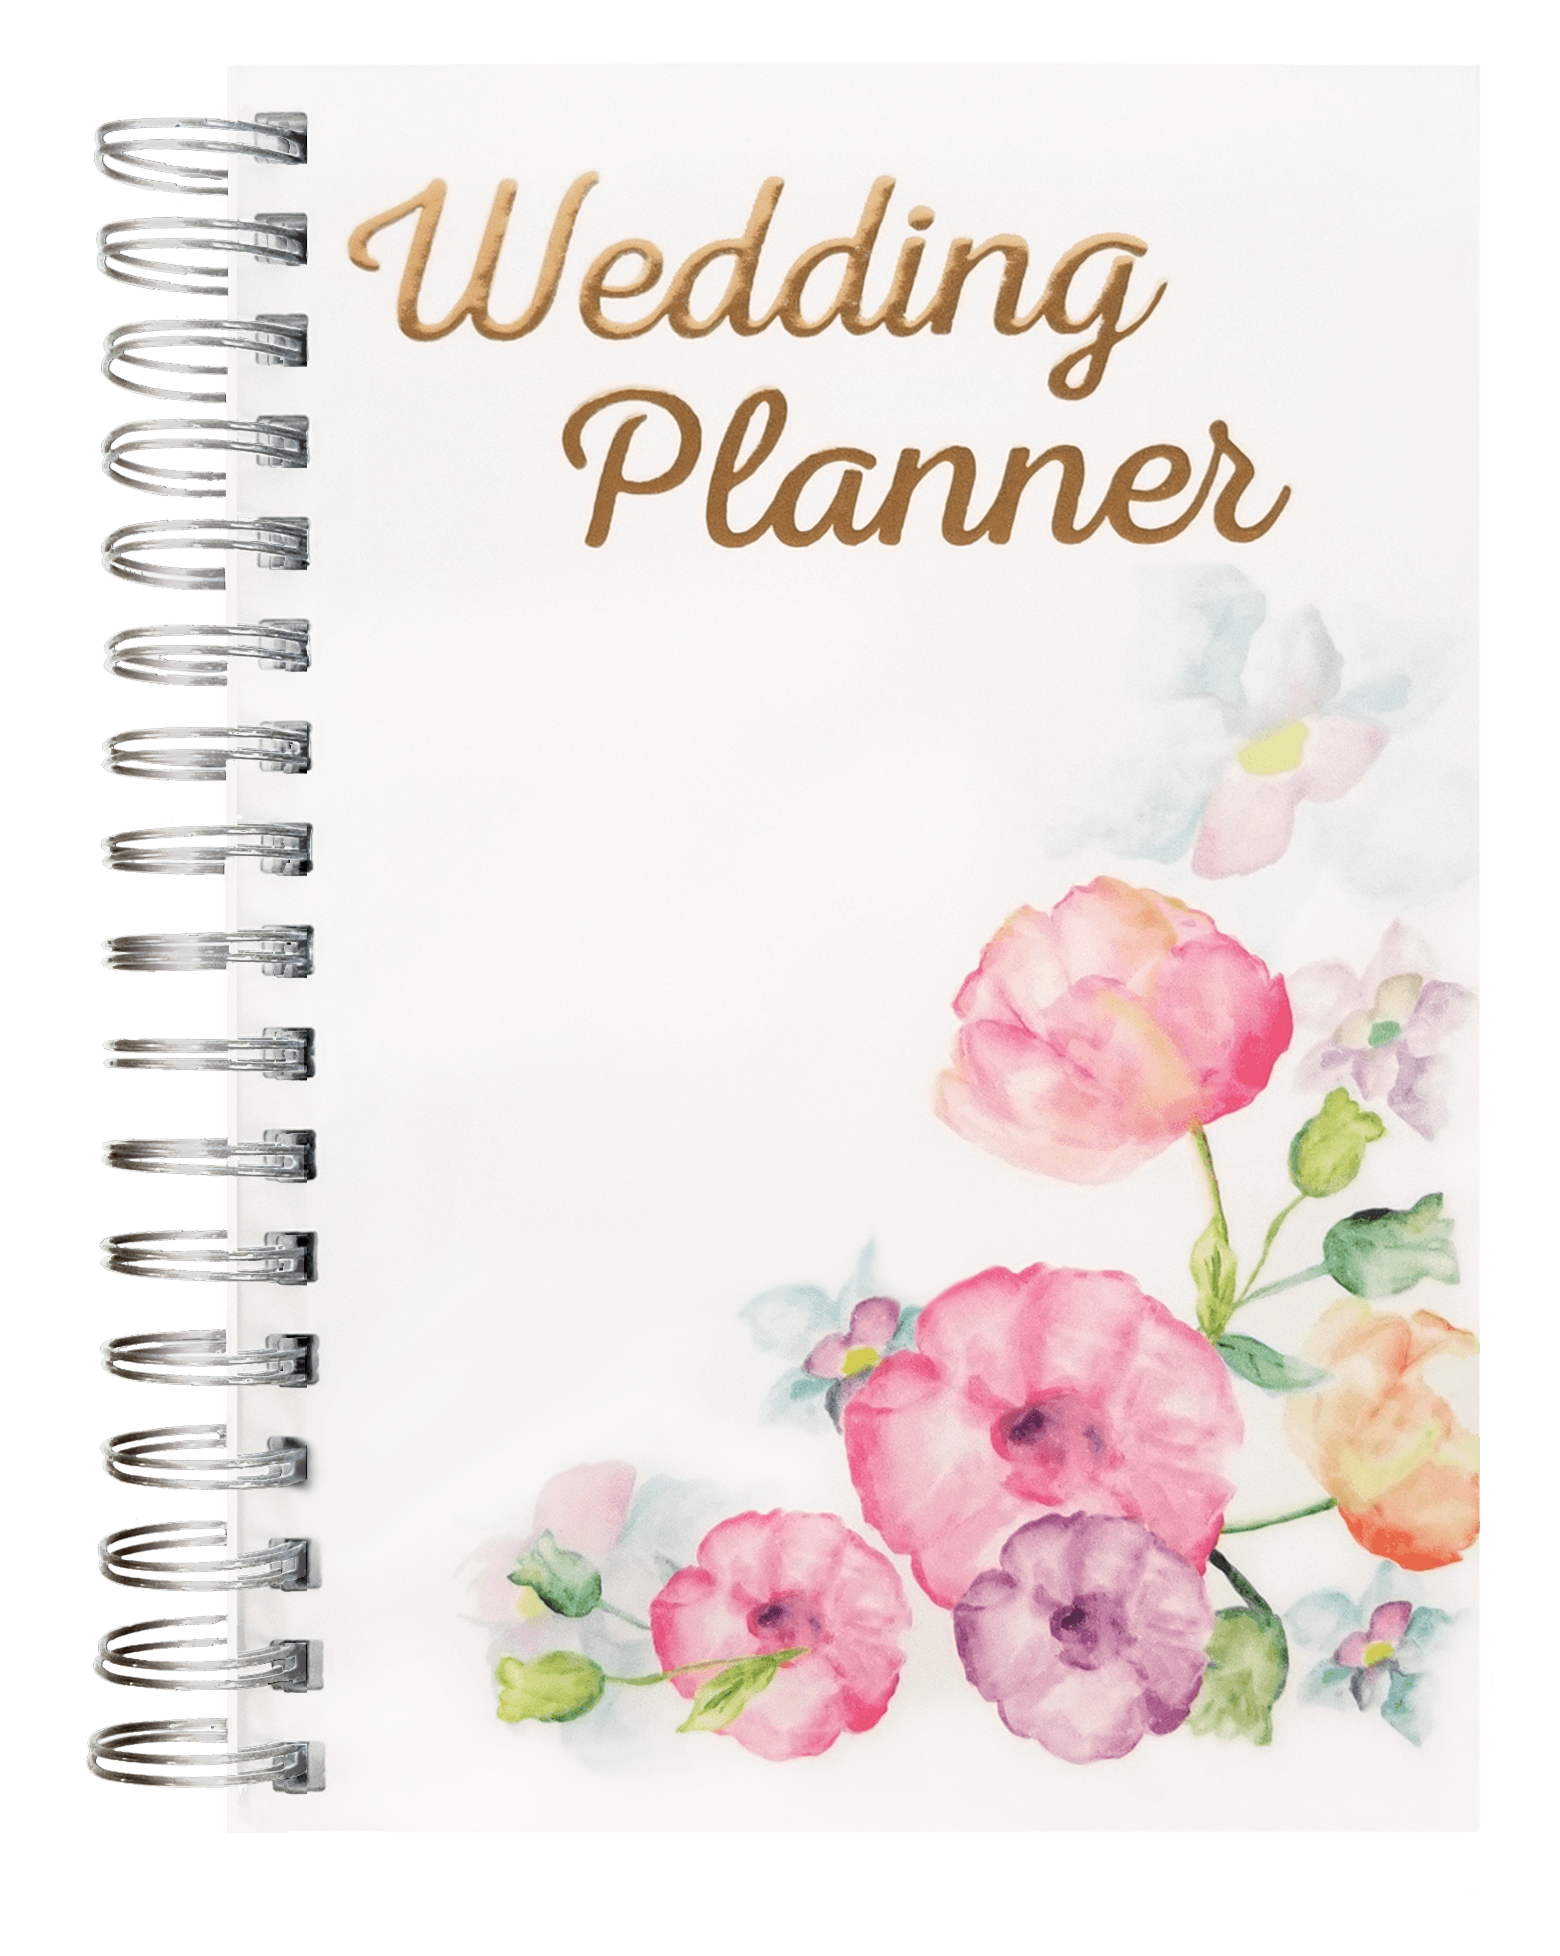 Wedding Planner w silver coil